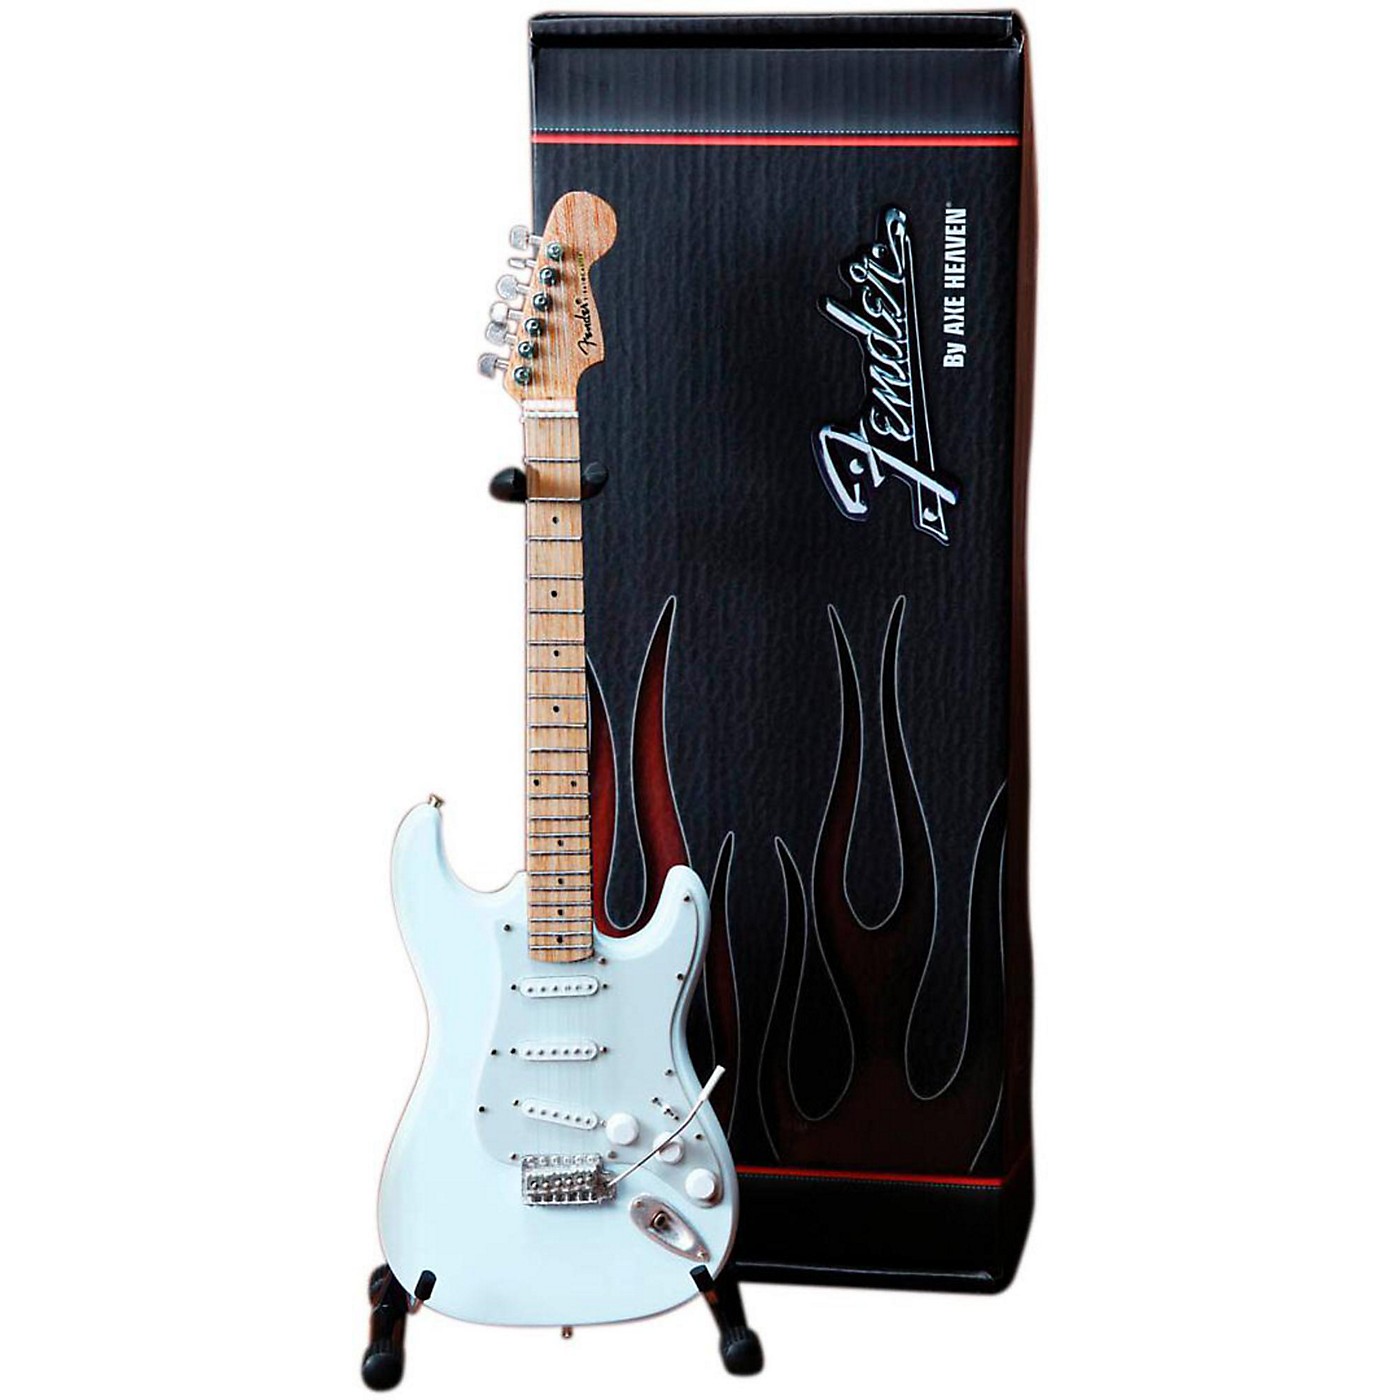 Axe Heaven Fender Stratocaster Olympic White Miniature Guitar Replica Collectible thumbnail